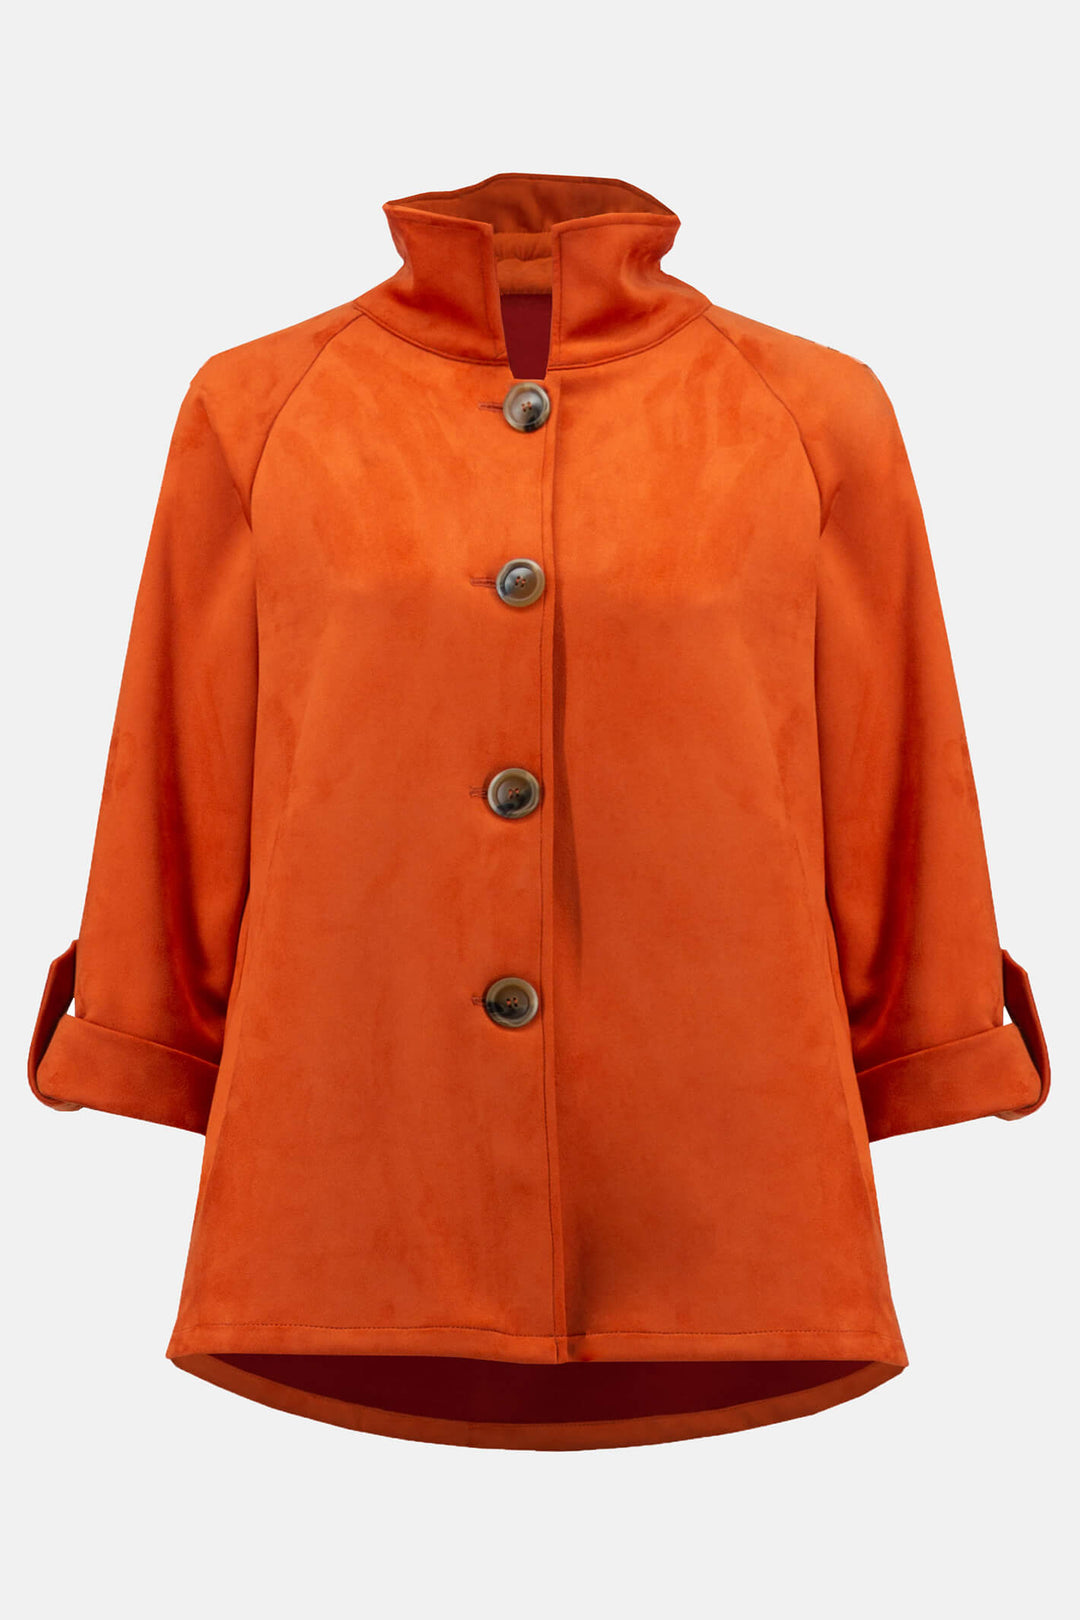 Joseph Ribkoff 233198 Tandoori Orange Faux Suede Jacket - Experience Boutique